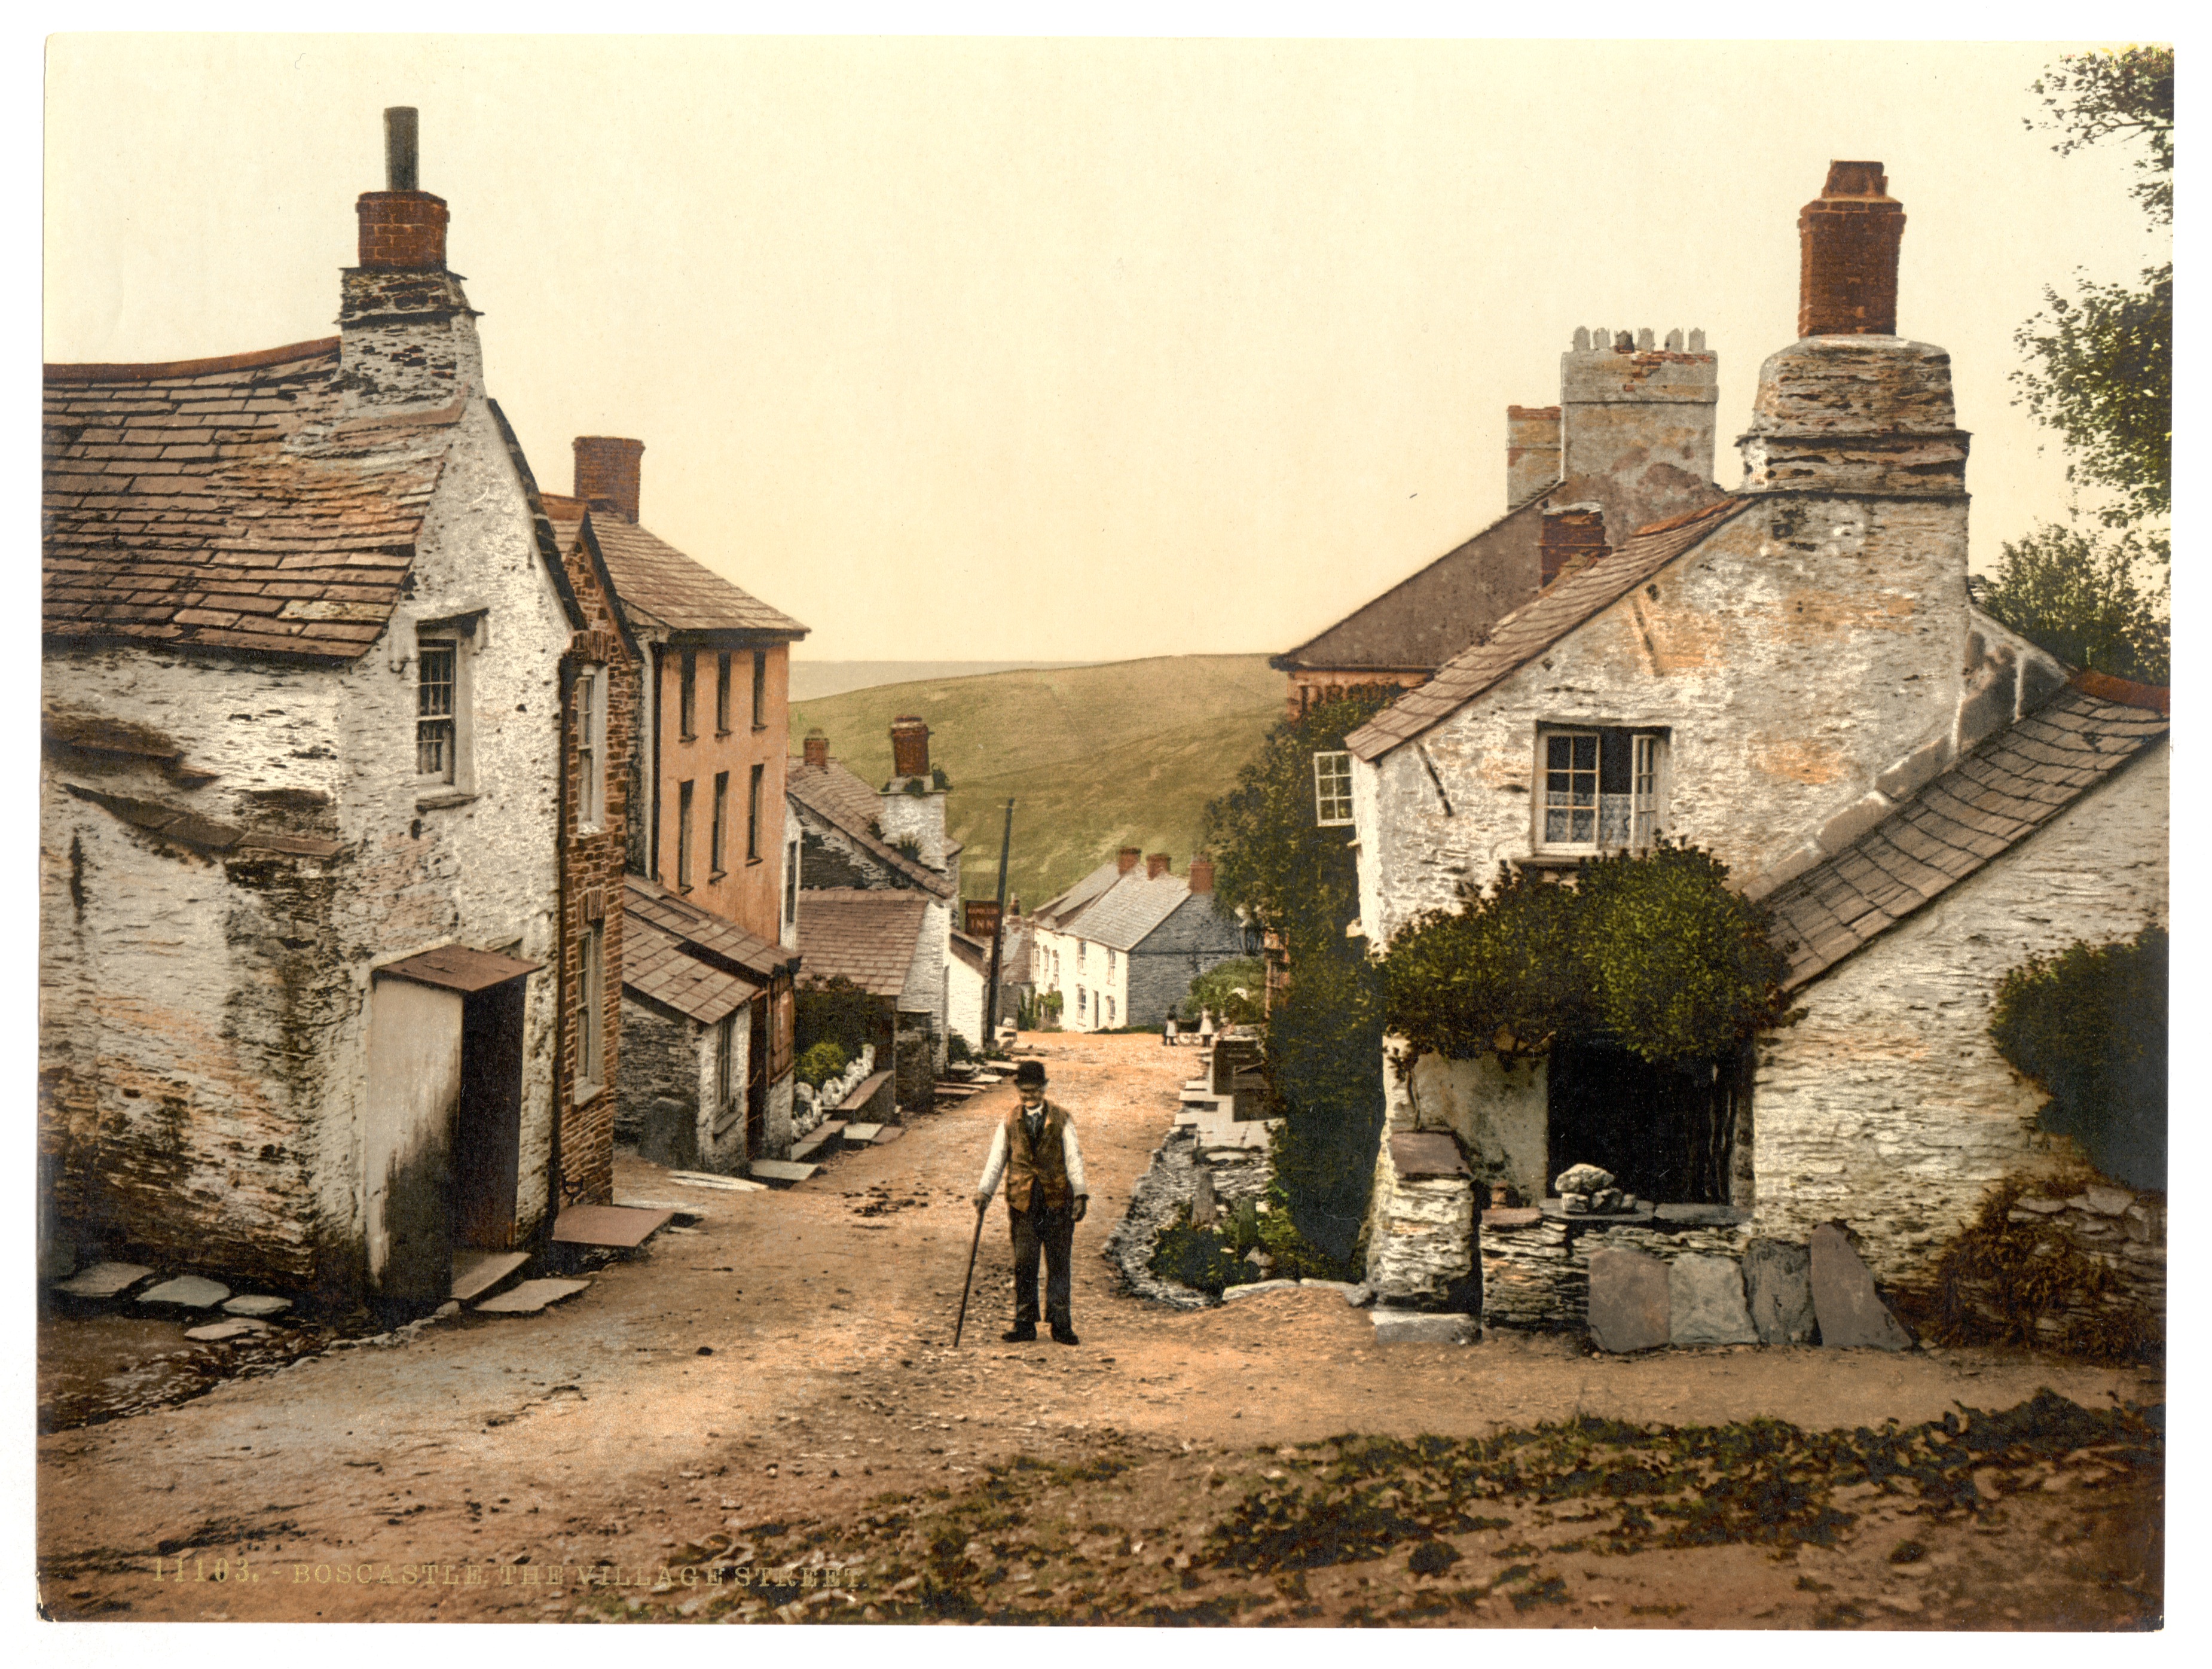 Old society. Корнуолл Англия Англия. Британия деревня 19 век. Англия графство Корнуэлл. Провинция Франции 19 век.